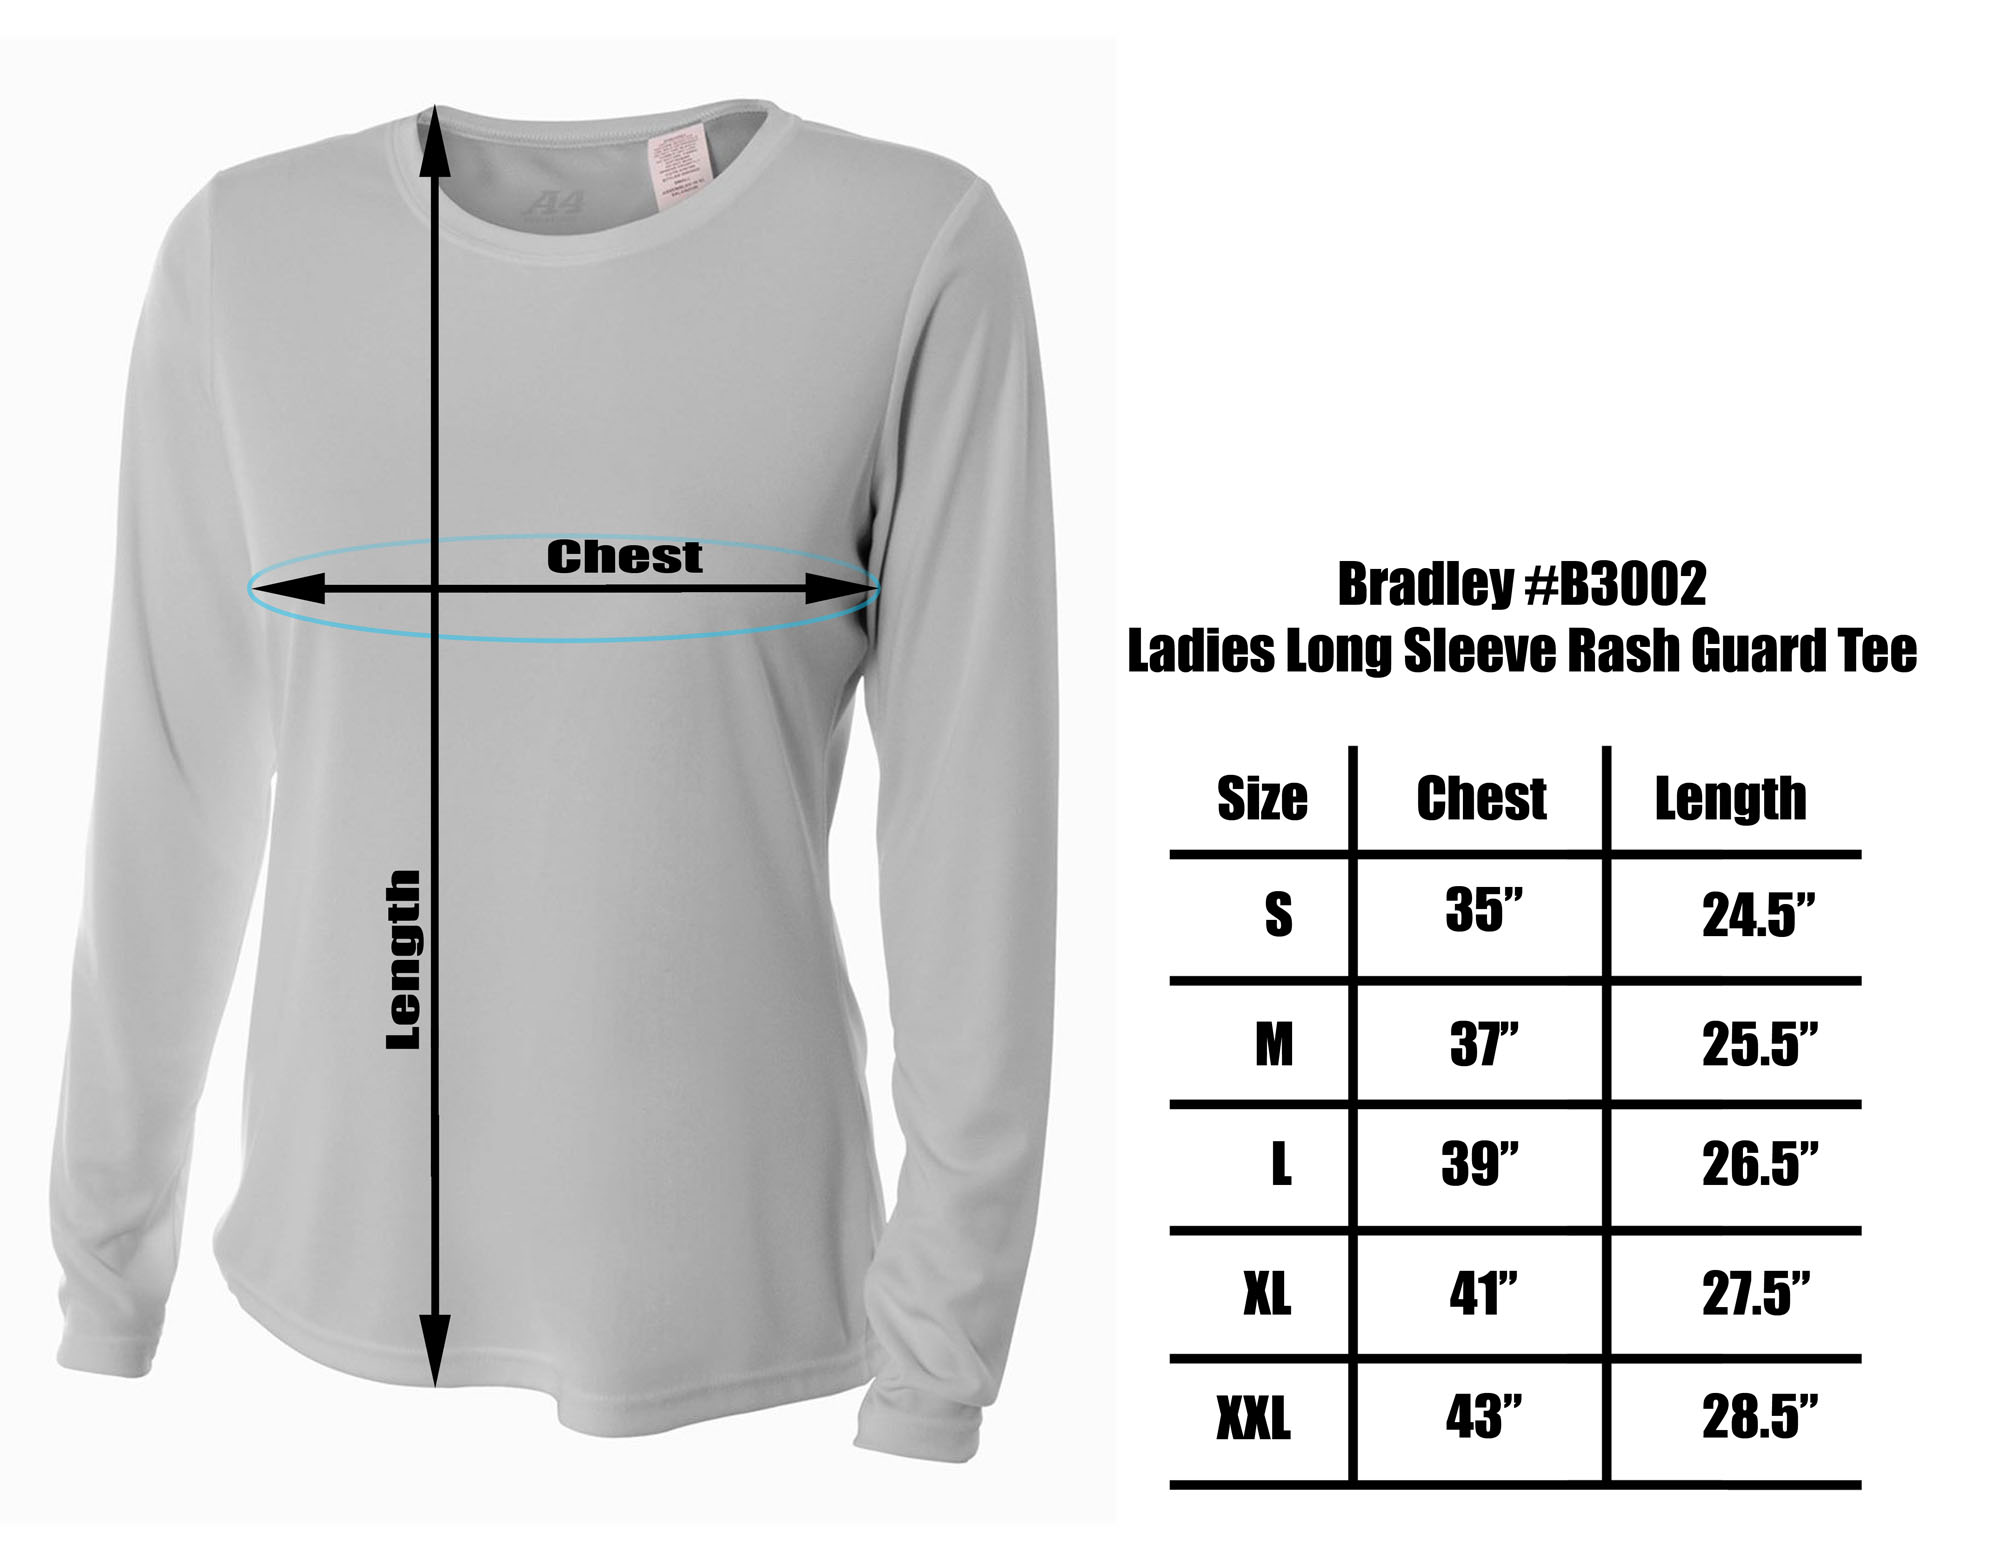 Bradley Women's Casual Fit Long Sleeve Rash Guard Swim Shirt with UV Protection - image 2 of 2